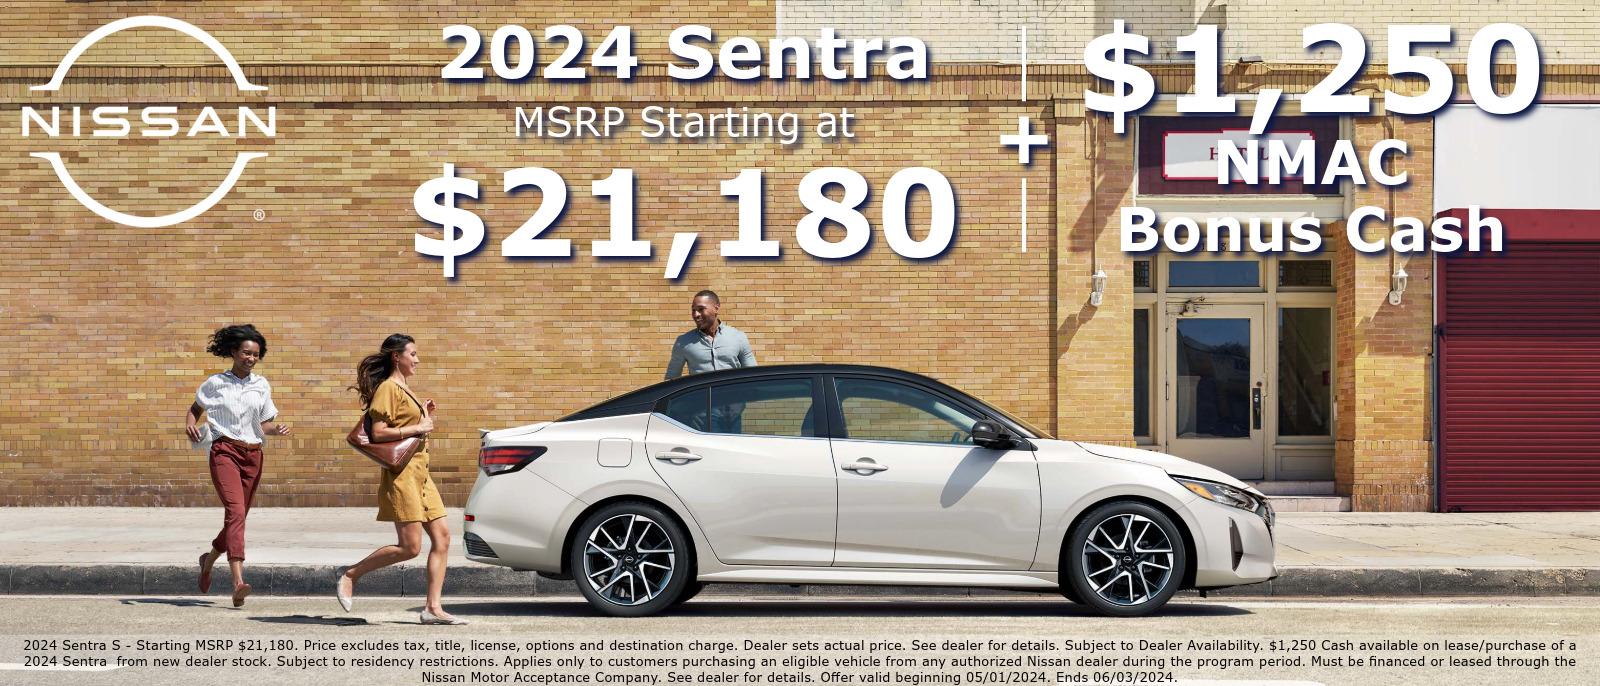 2024 Sentra - $1,250 NMAC Bonus Cash